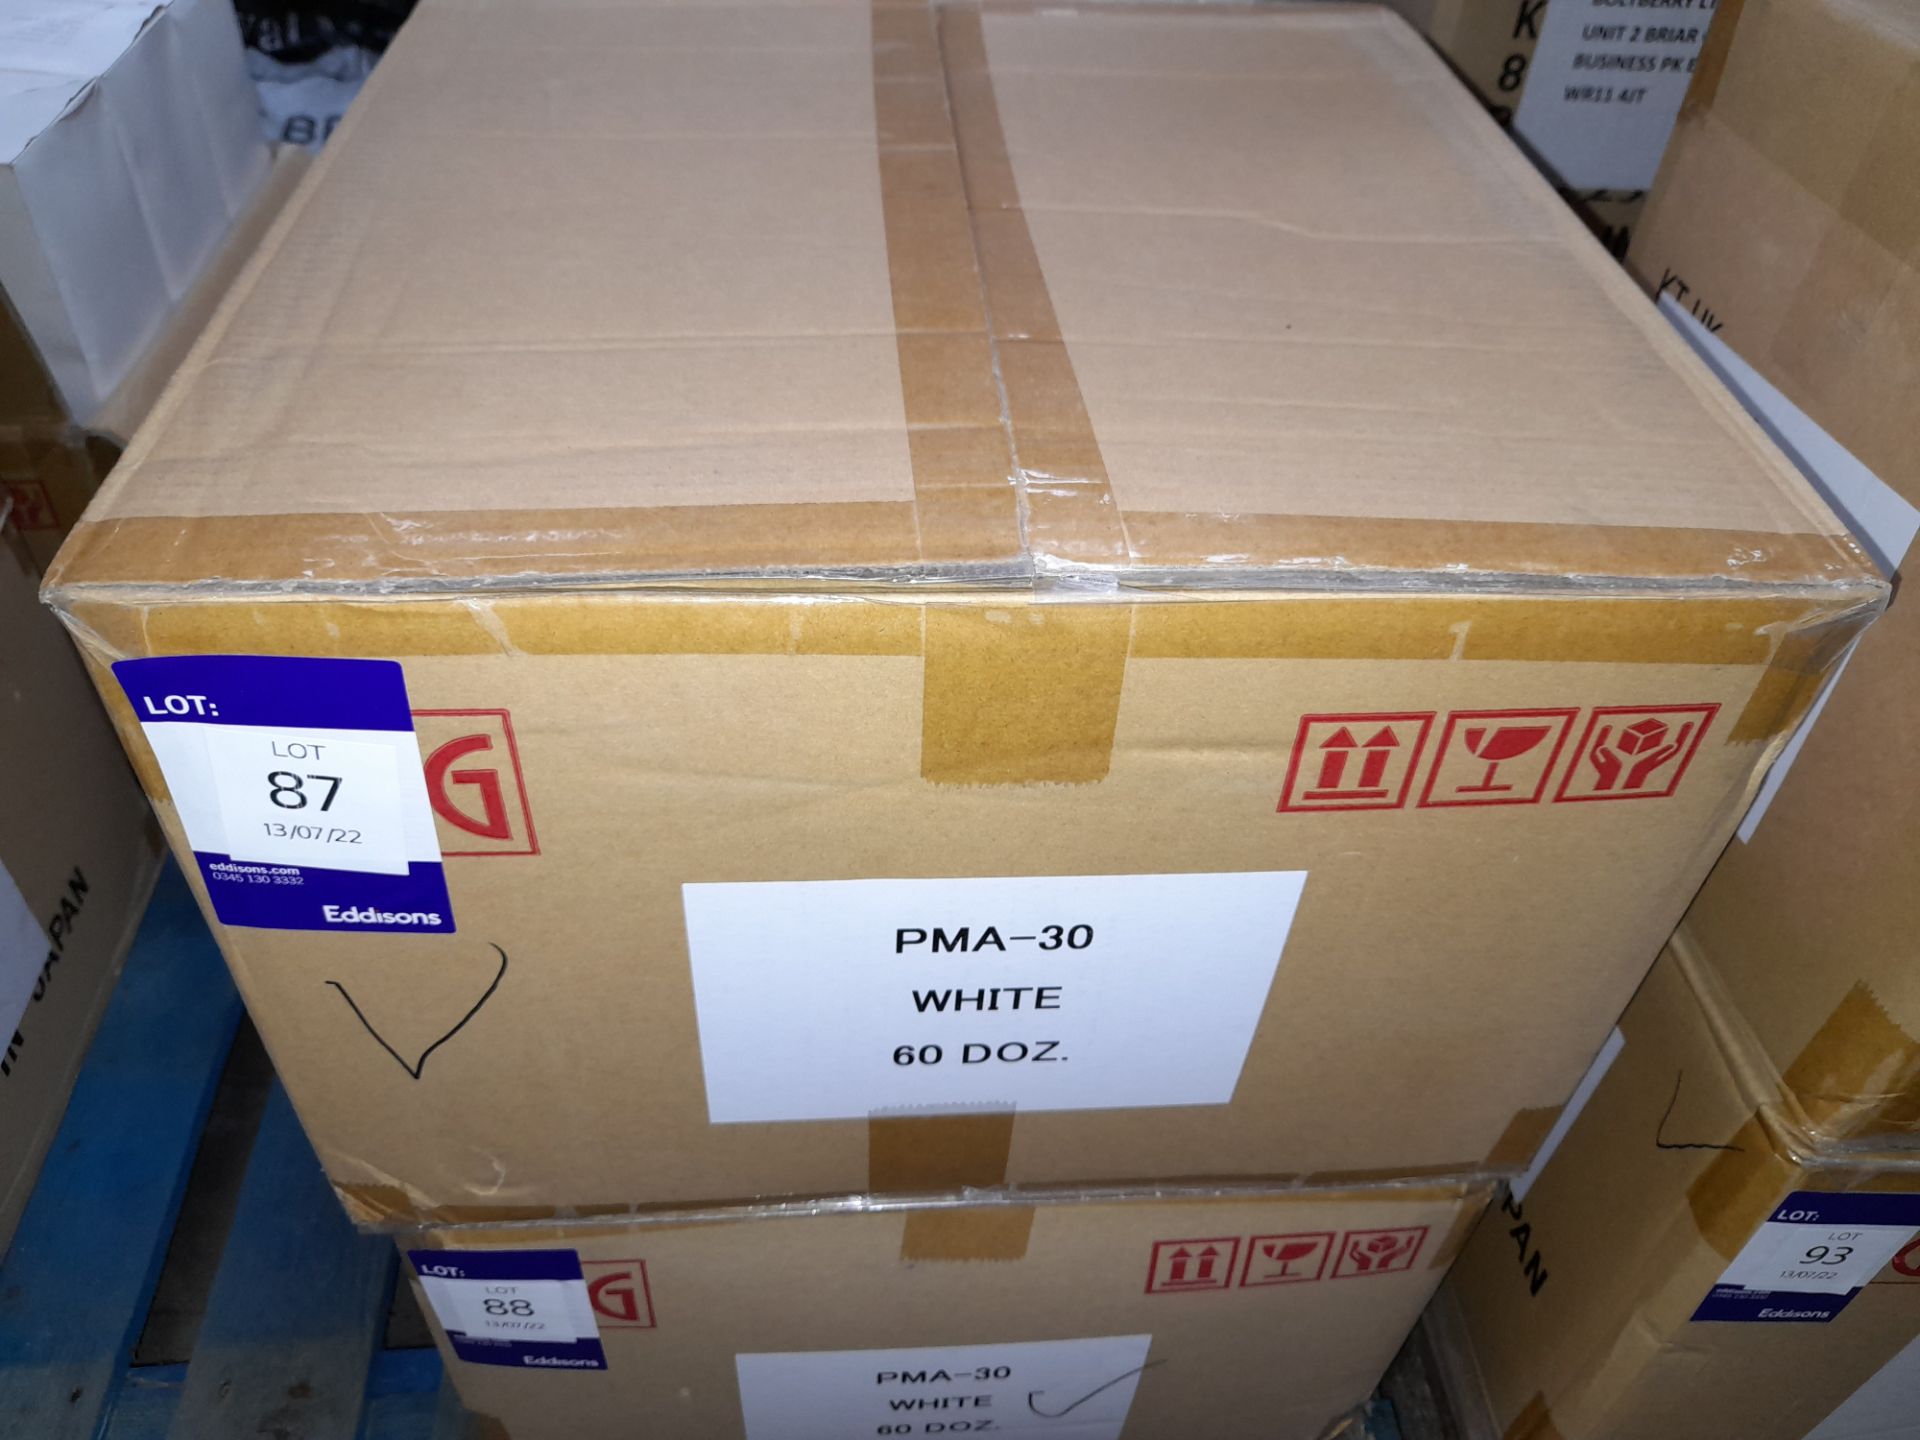 1 x Box of Kuretake Zig Posterman White PMA-30 Mar